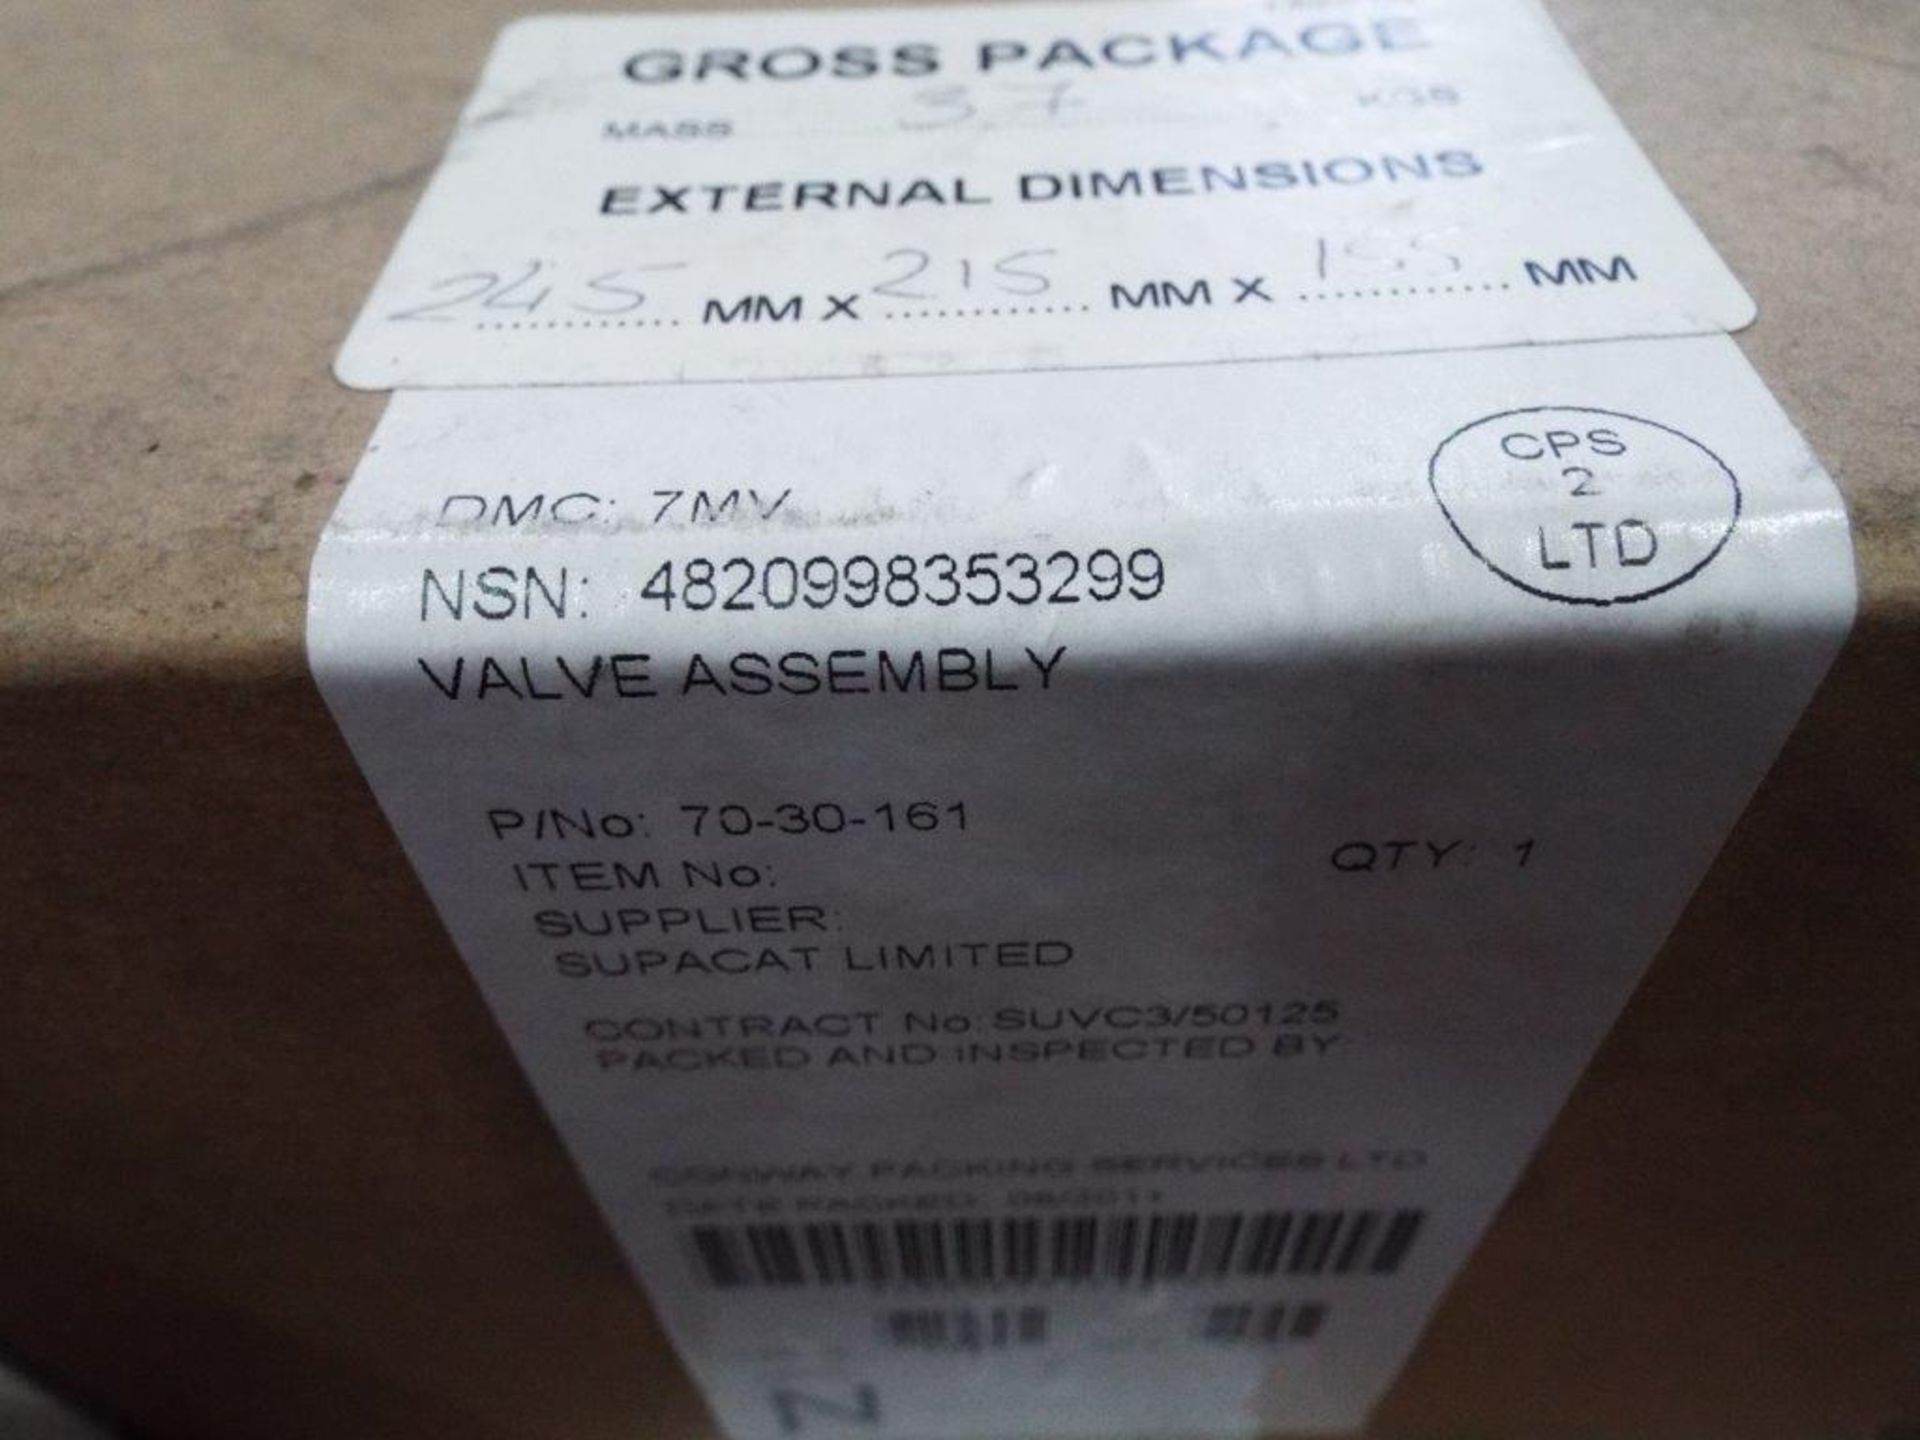 9 x Knorr Bremse / Supacat Hydraulic Valve Blocks P/No 70-30-161 - Image 6 of 7